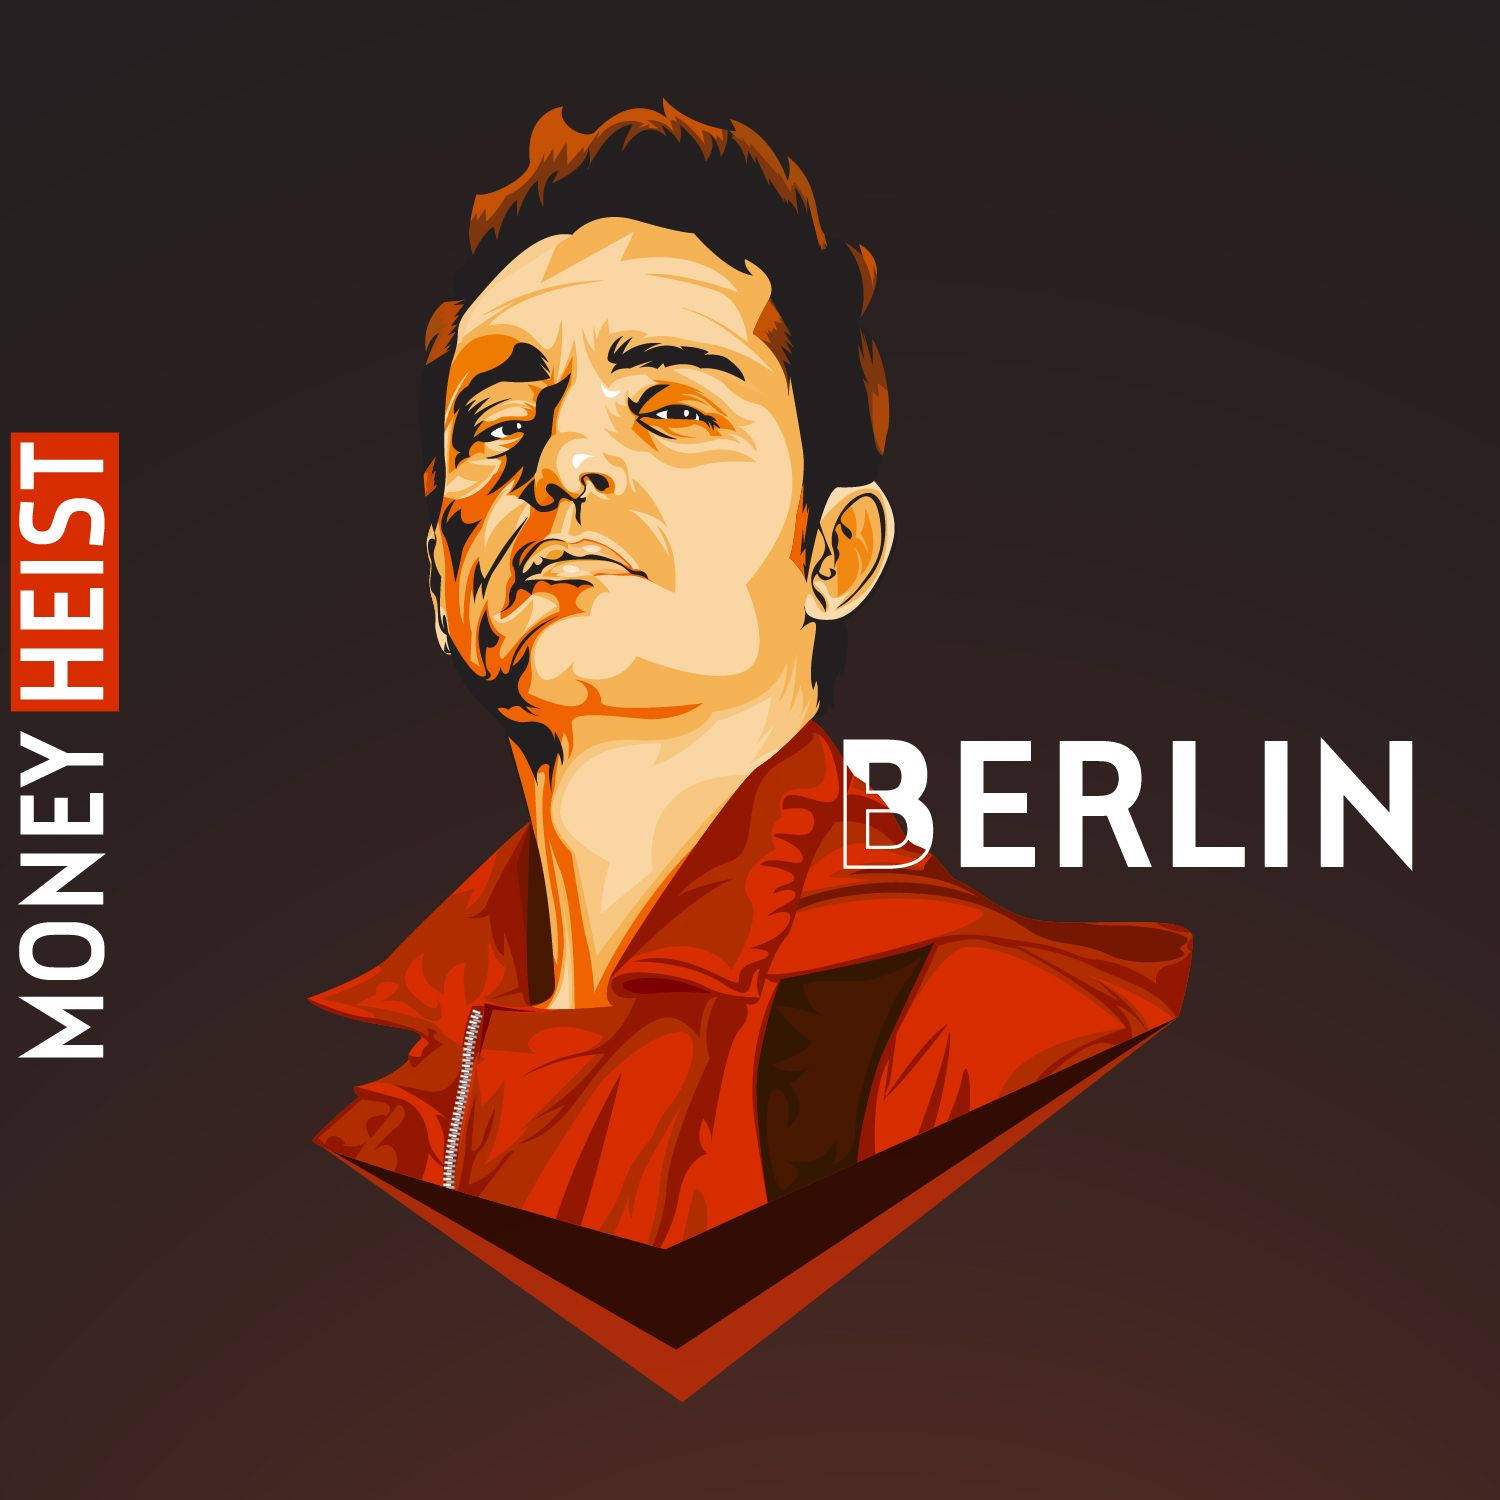 Berlin Money Heist Digital Art Wallpaper